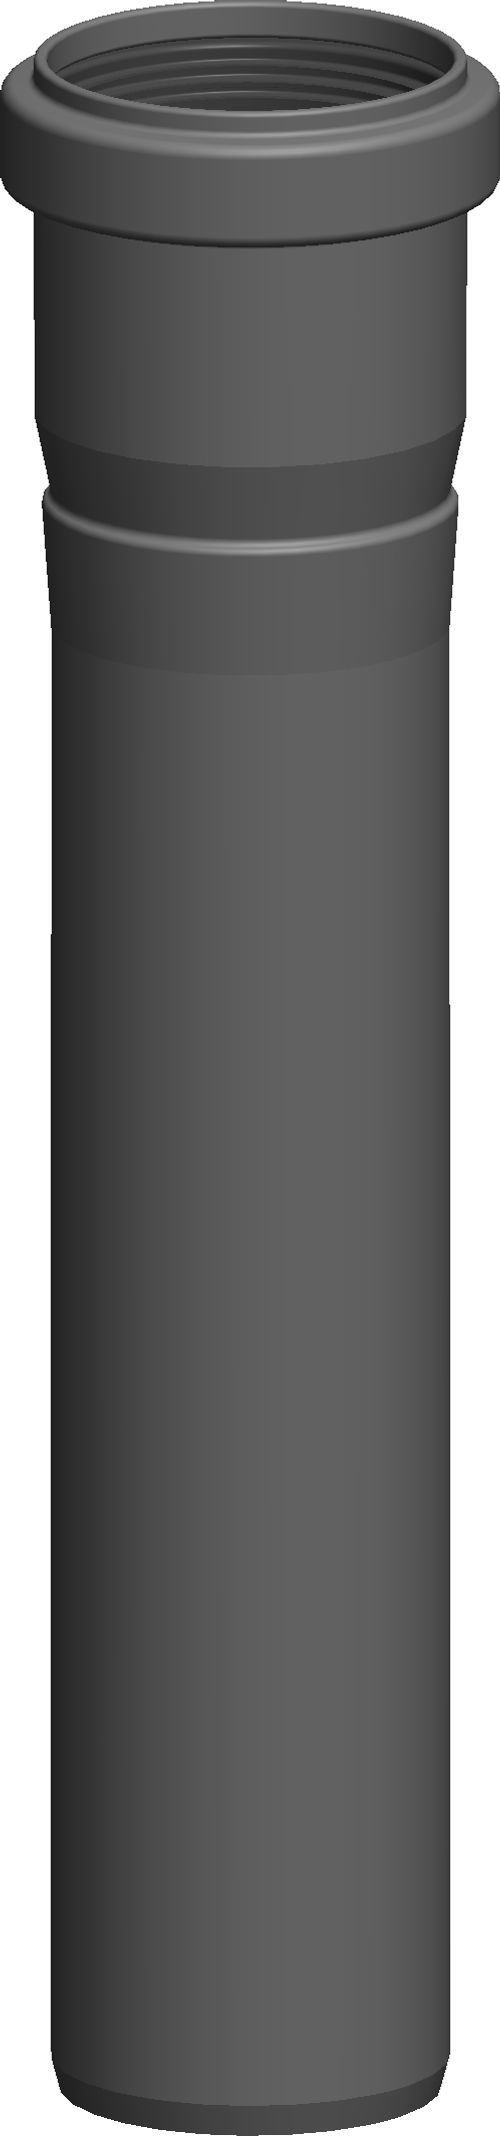 ATEC-Rohr-500mm-DN-60-kuerzbar-einwandig-0318